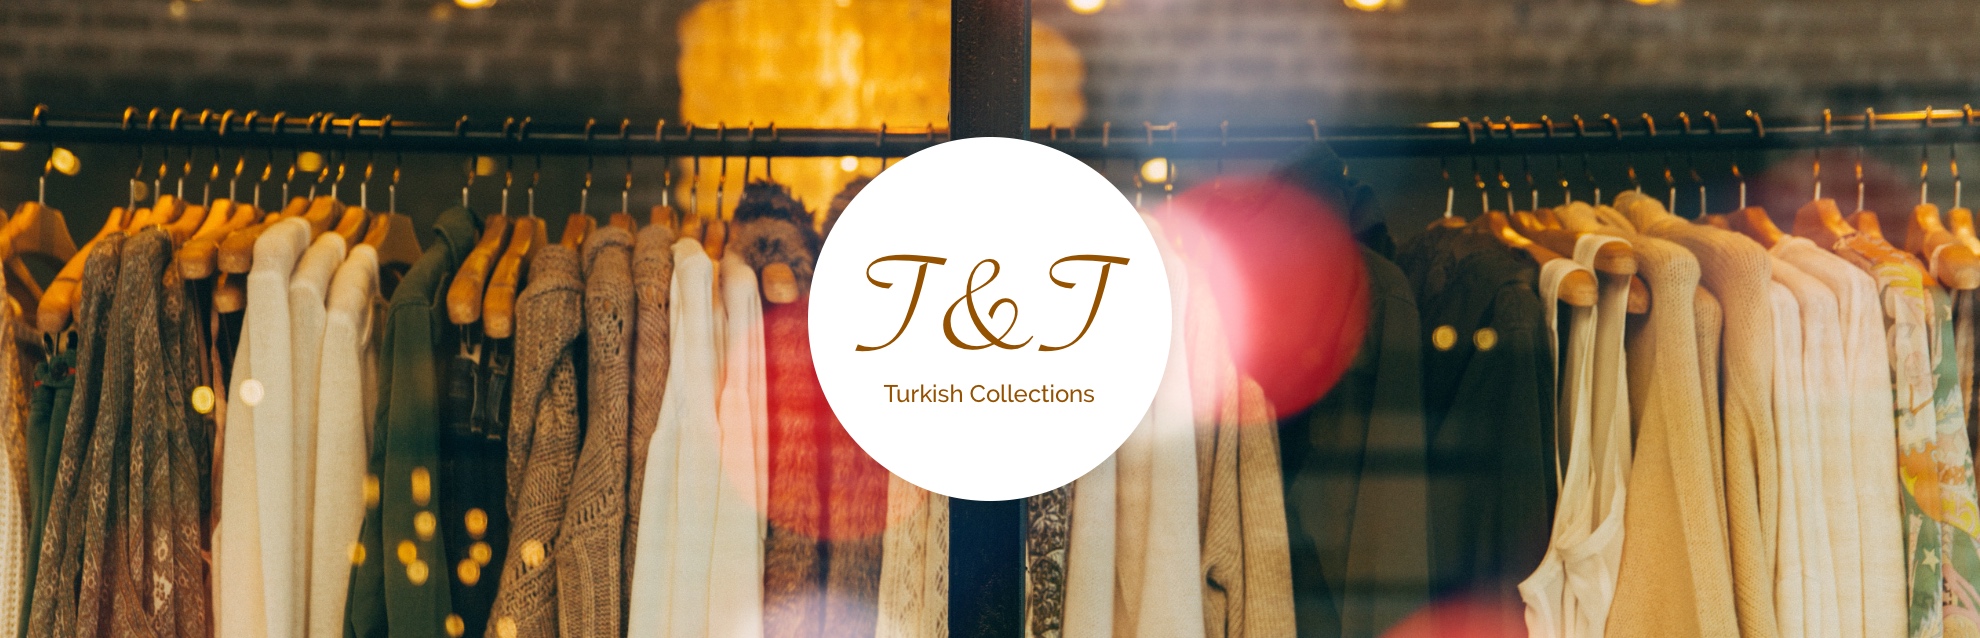 TT Turkish collections